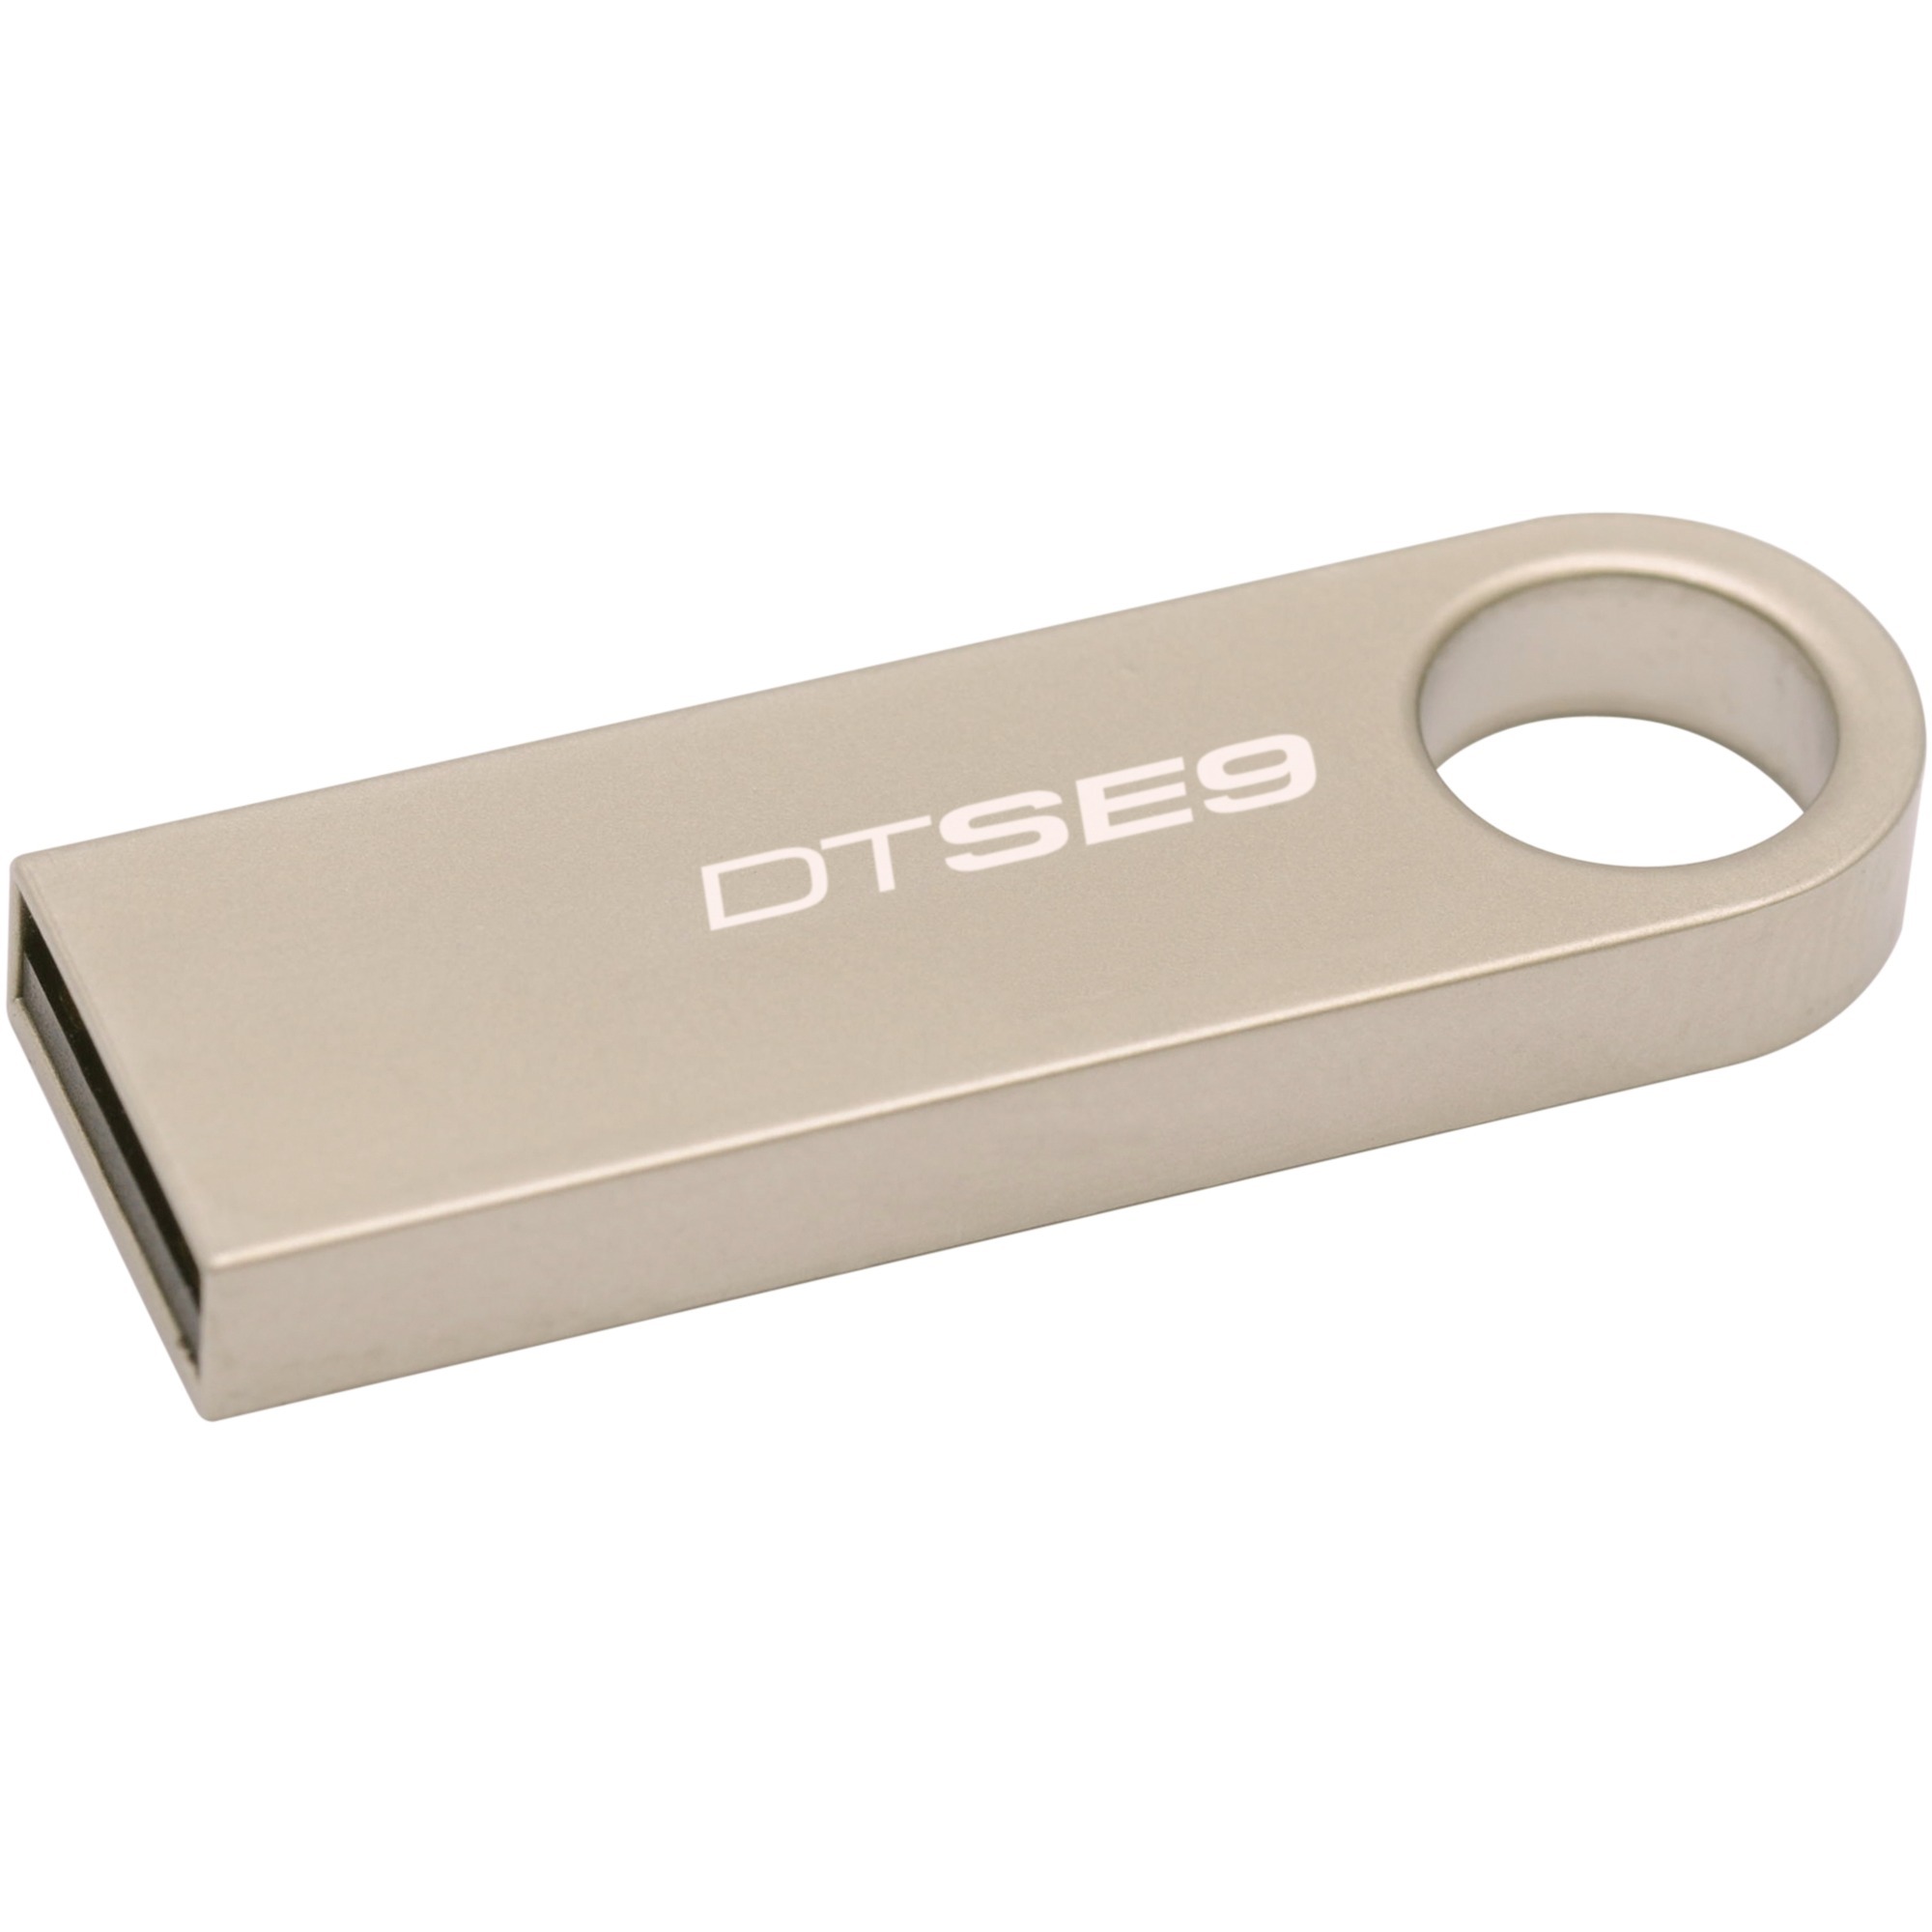 DataTraveler SE9 16GB pamięć USB 2.0 Złącze USB typu A Srebrny, Nośnik Pendrive USB